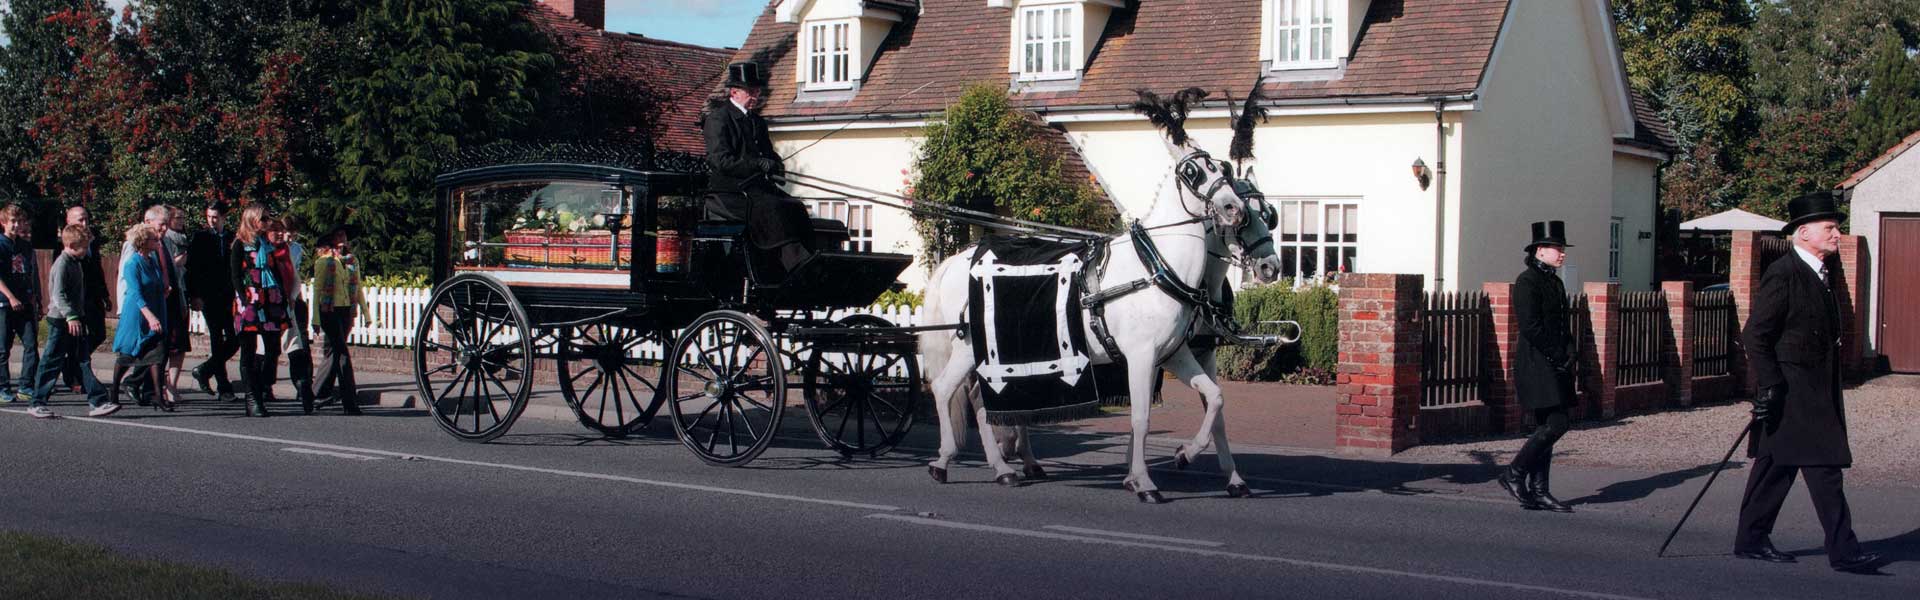 Deacons Funeral Services, Lavenham, Suffolk